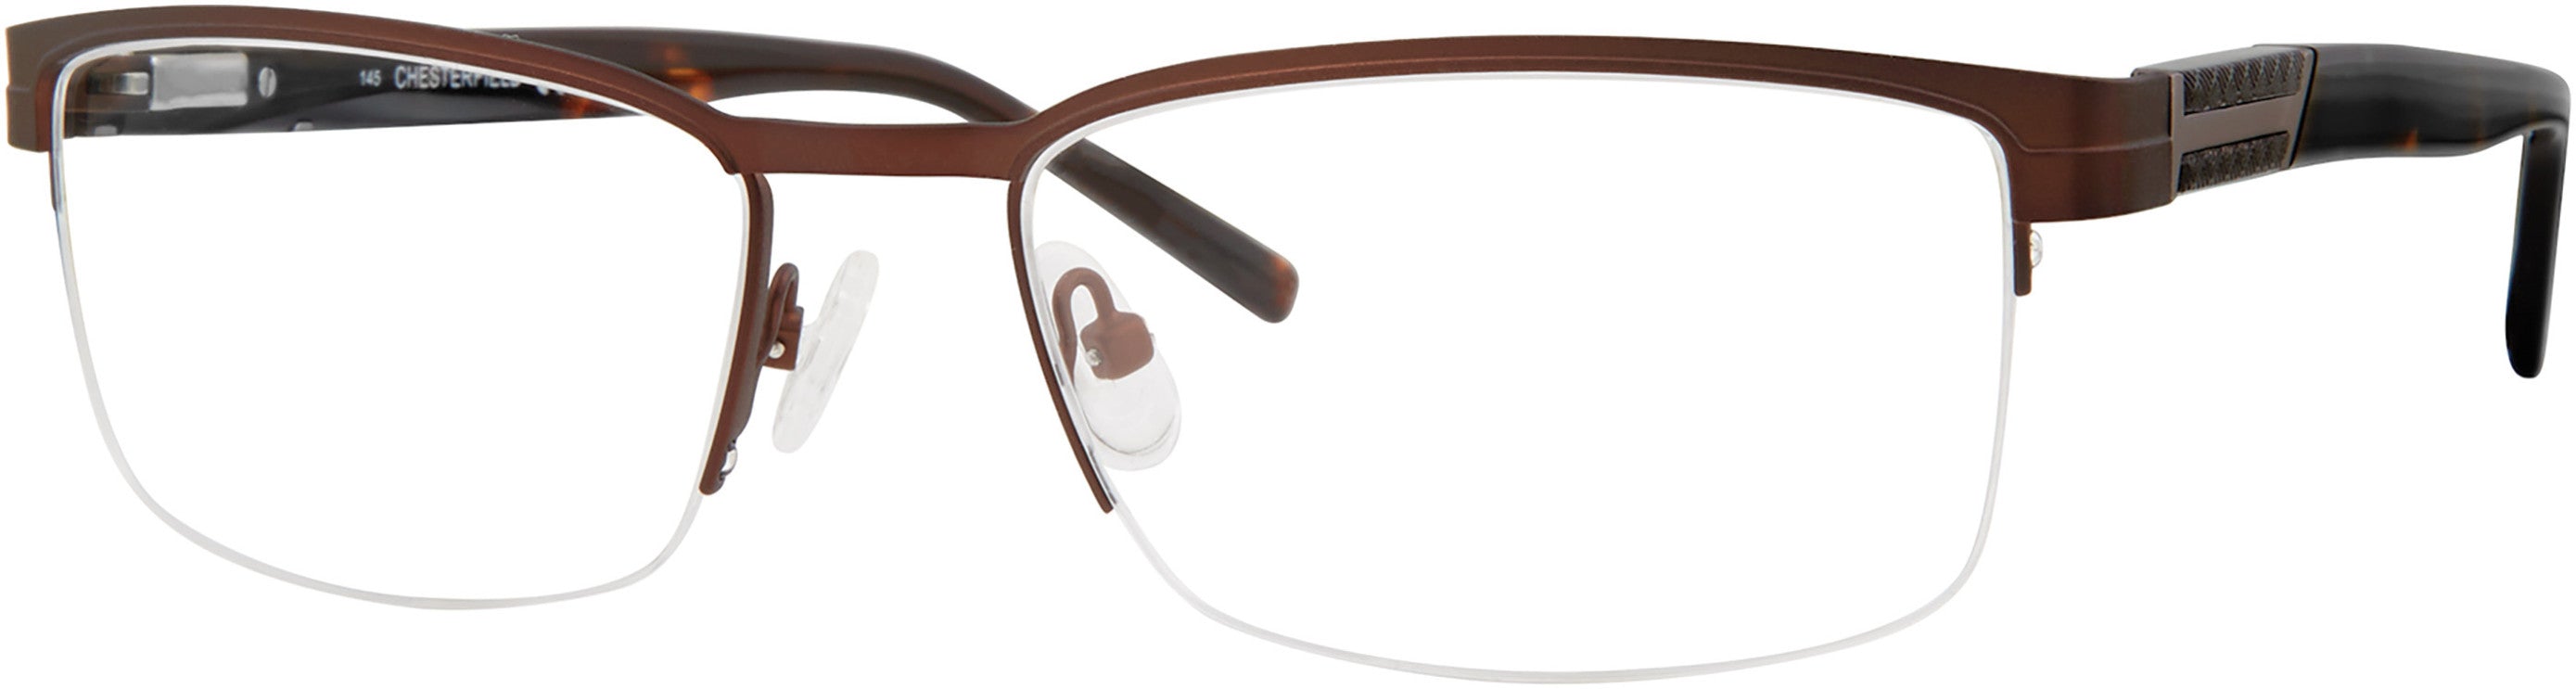  Chesterfield 65XL Rectangular Eyeglasses 04IN-04IN  Matte Brown (00 Demo Lens)